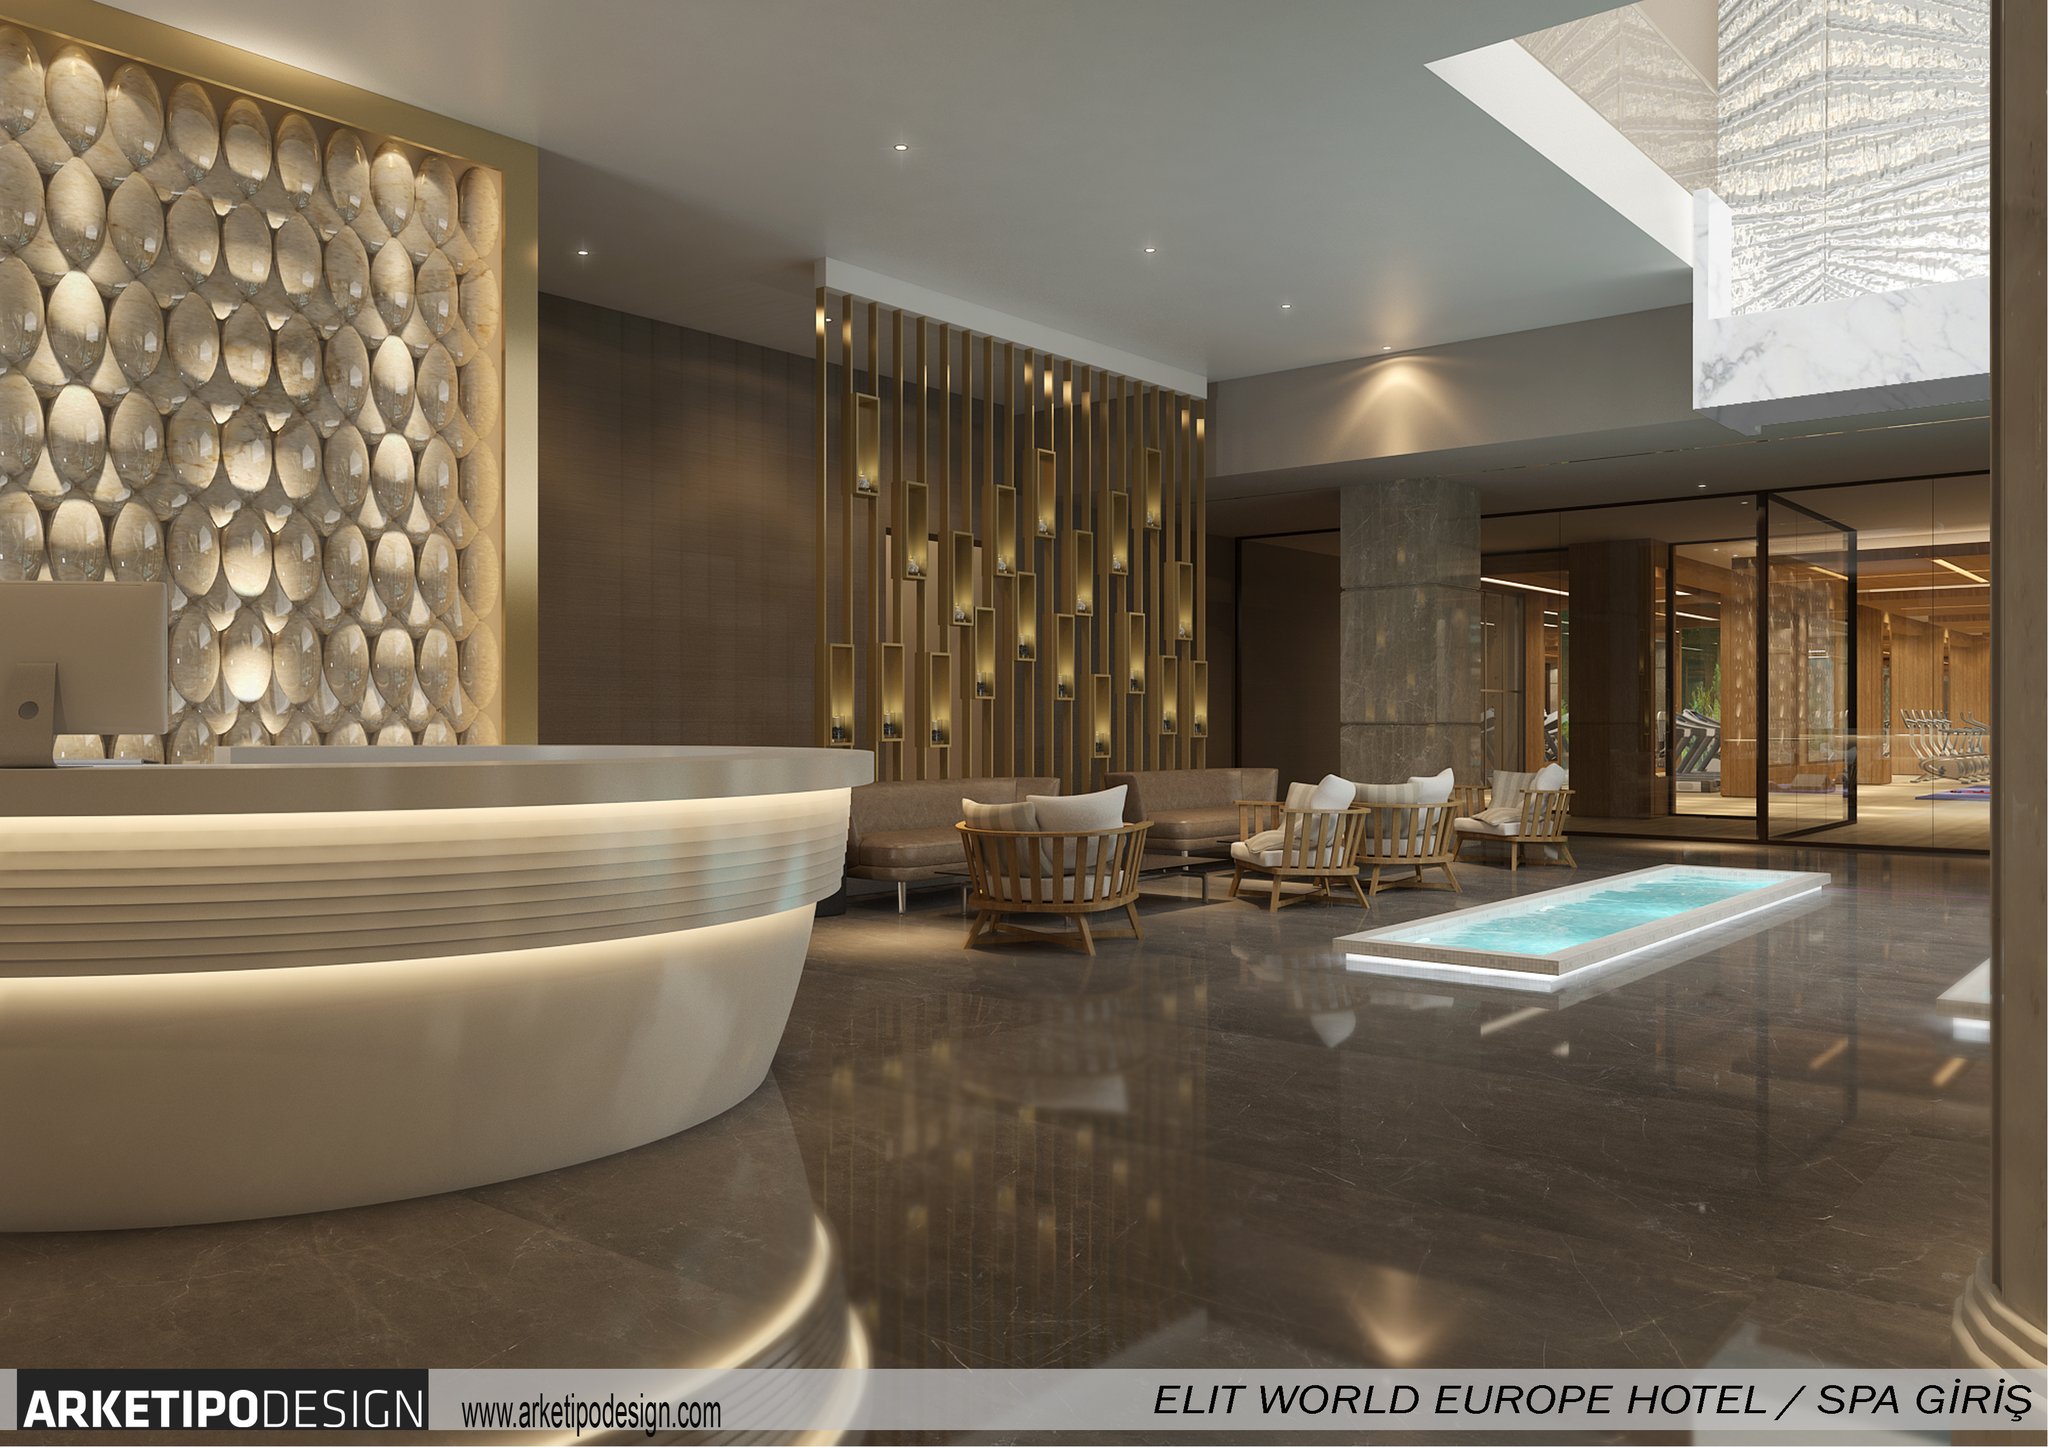 Elite World Europe Hotel